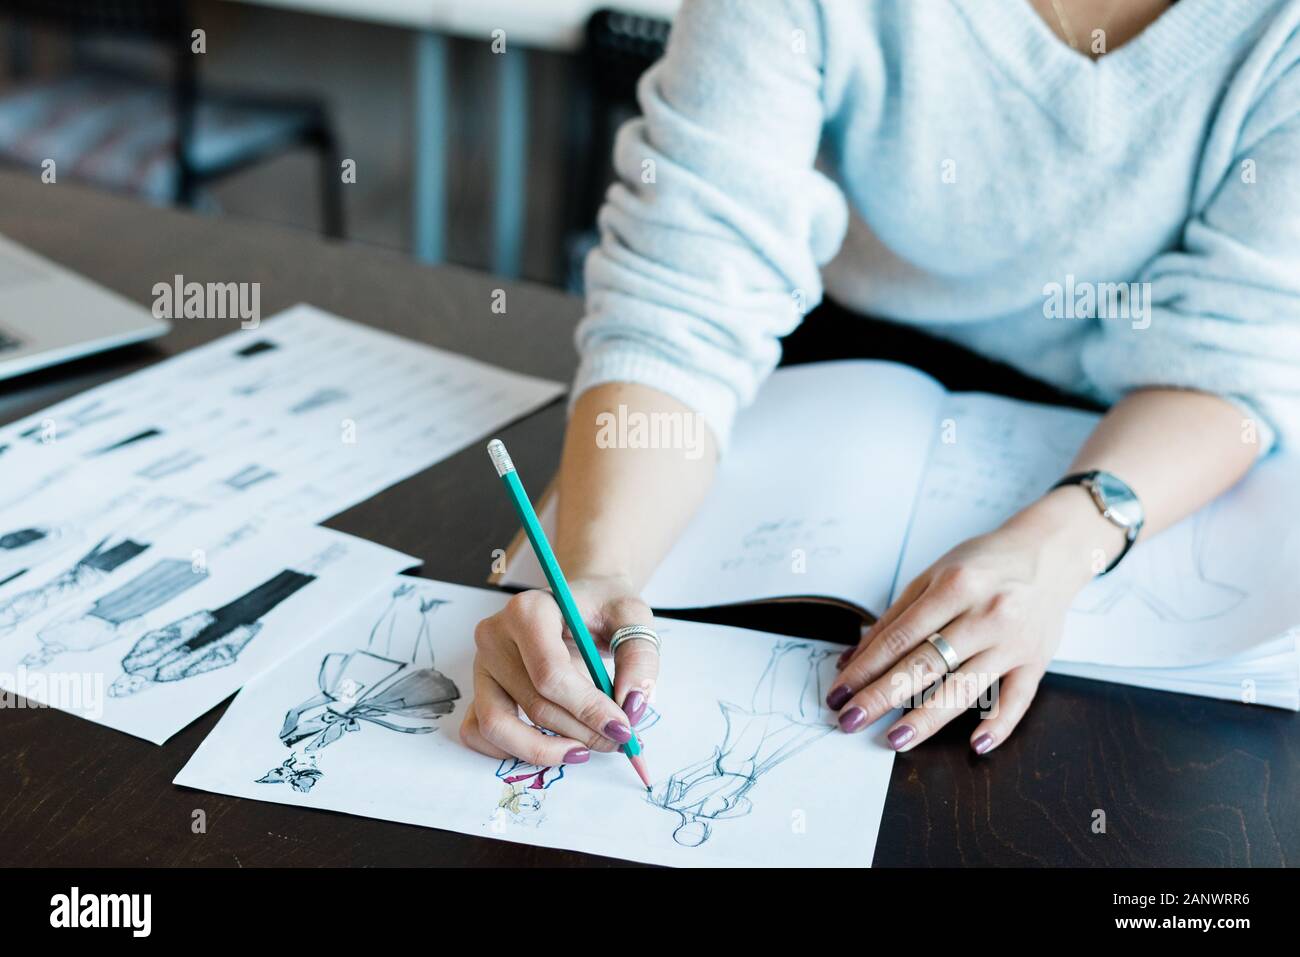 Woman working on fashion sketch design Stock Photo